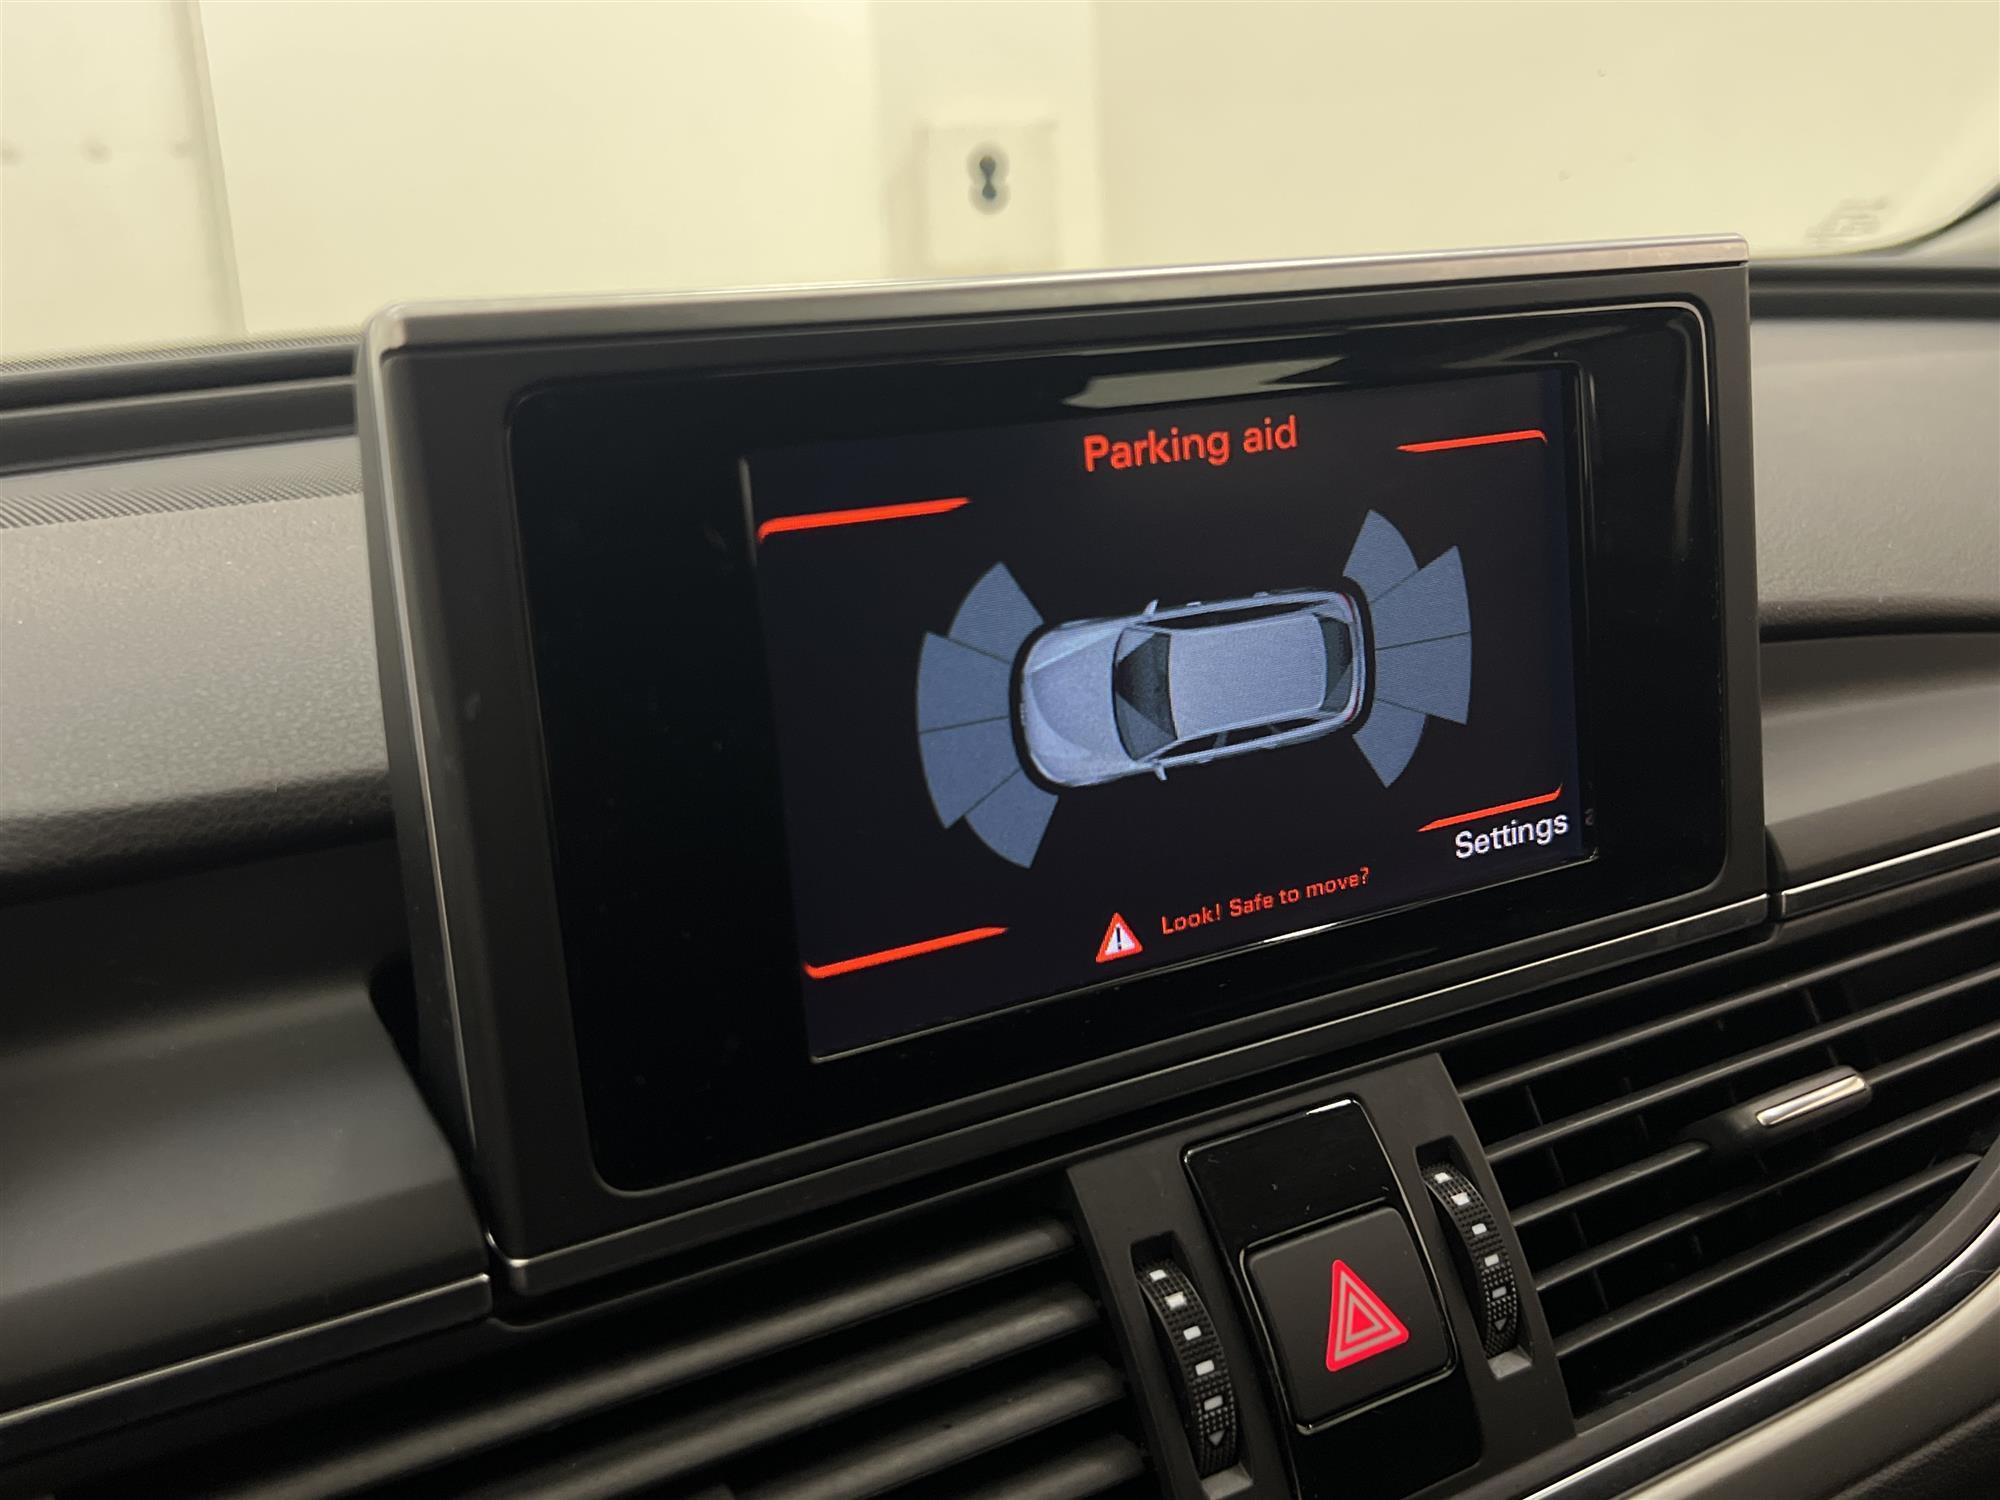 Audi A6 Avant 2.0 TDI 190hk Proline Sensorer Välservad 